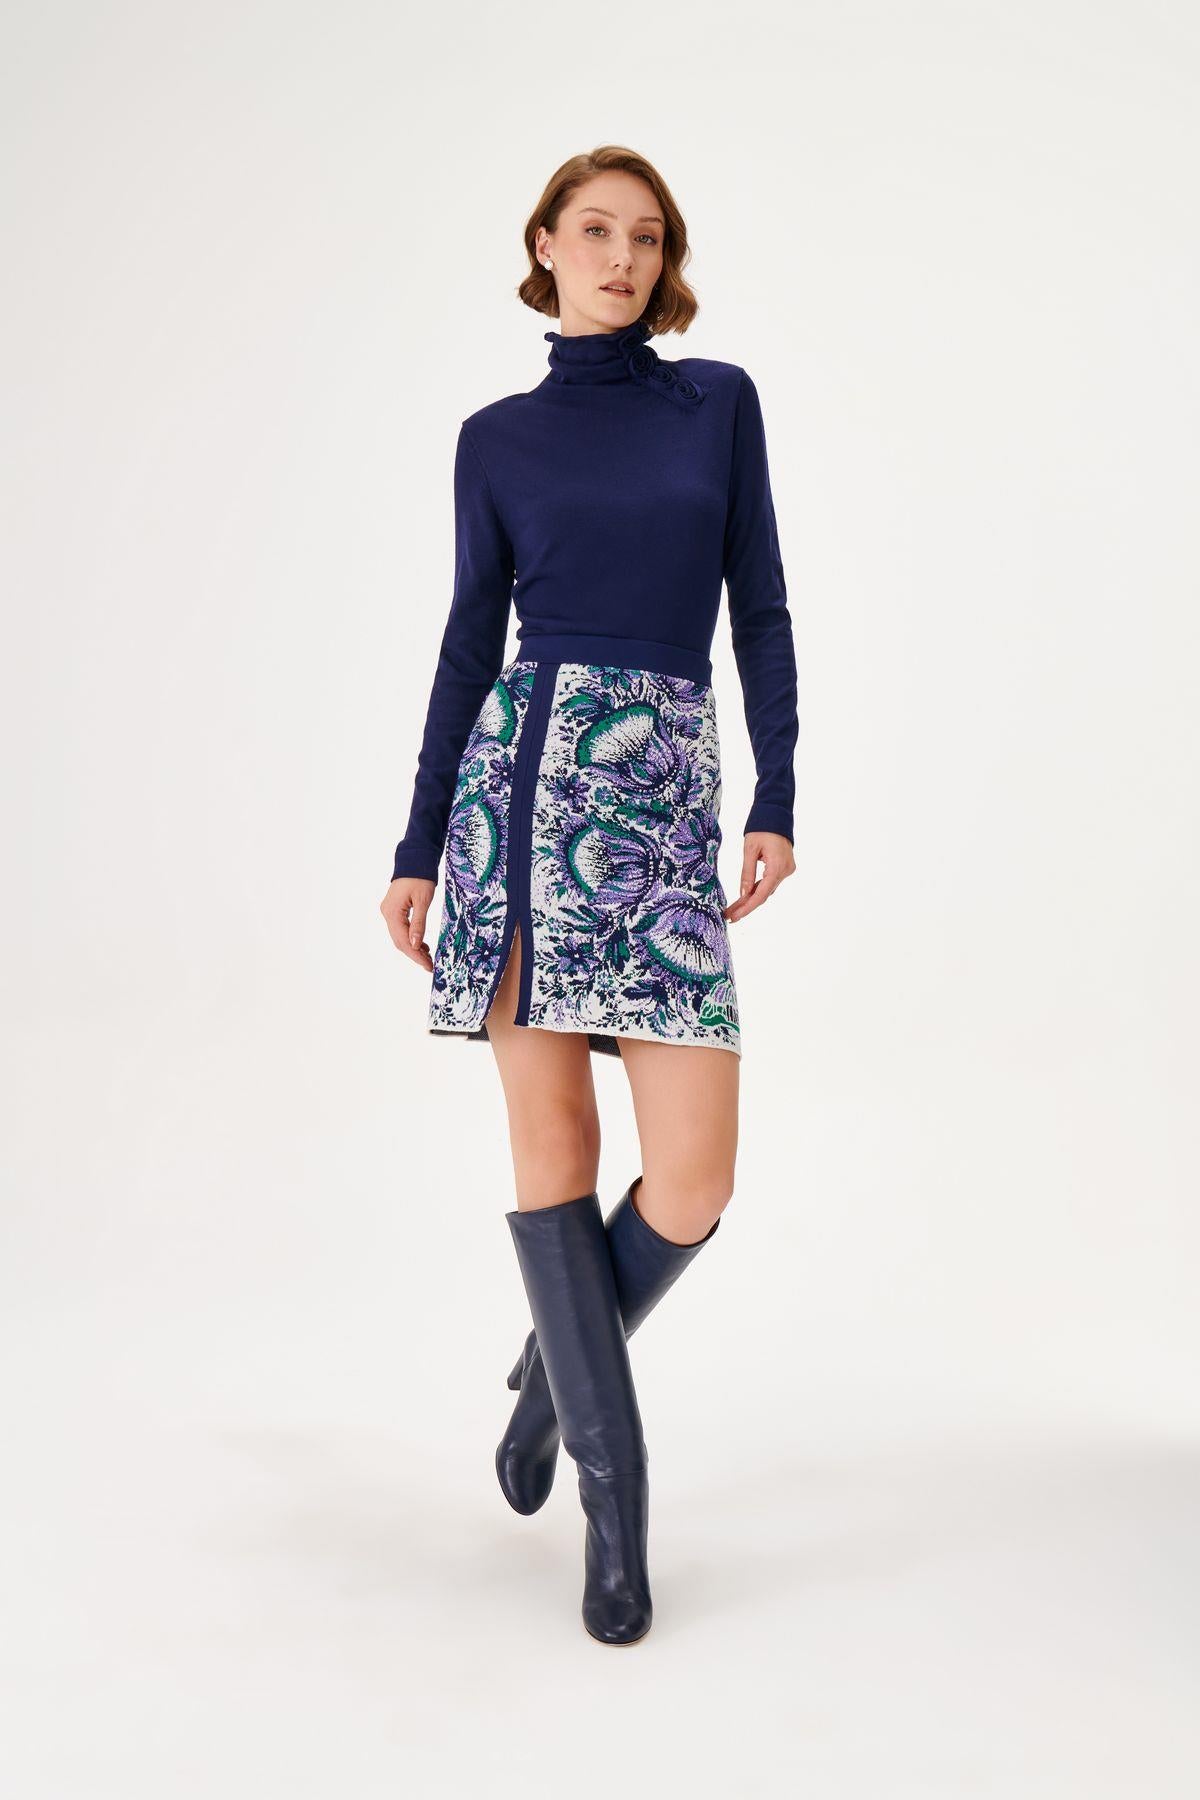 Flower Patterned Purple Mini Knit Skirt